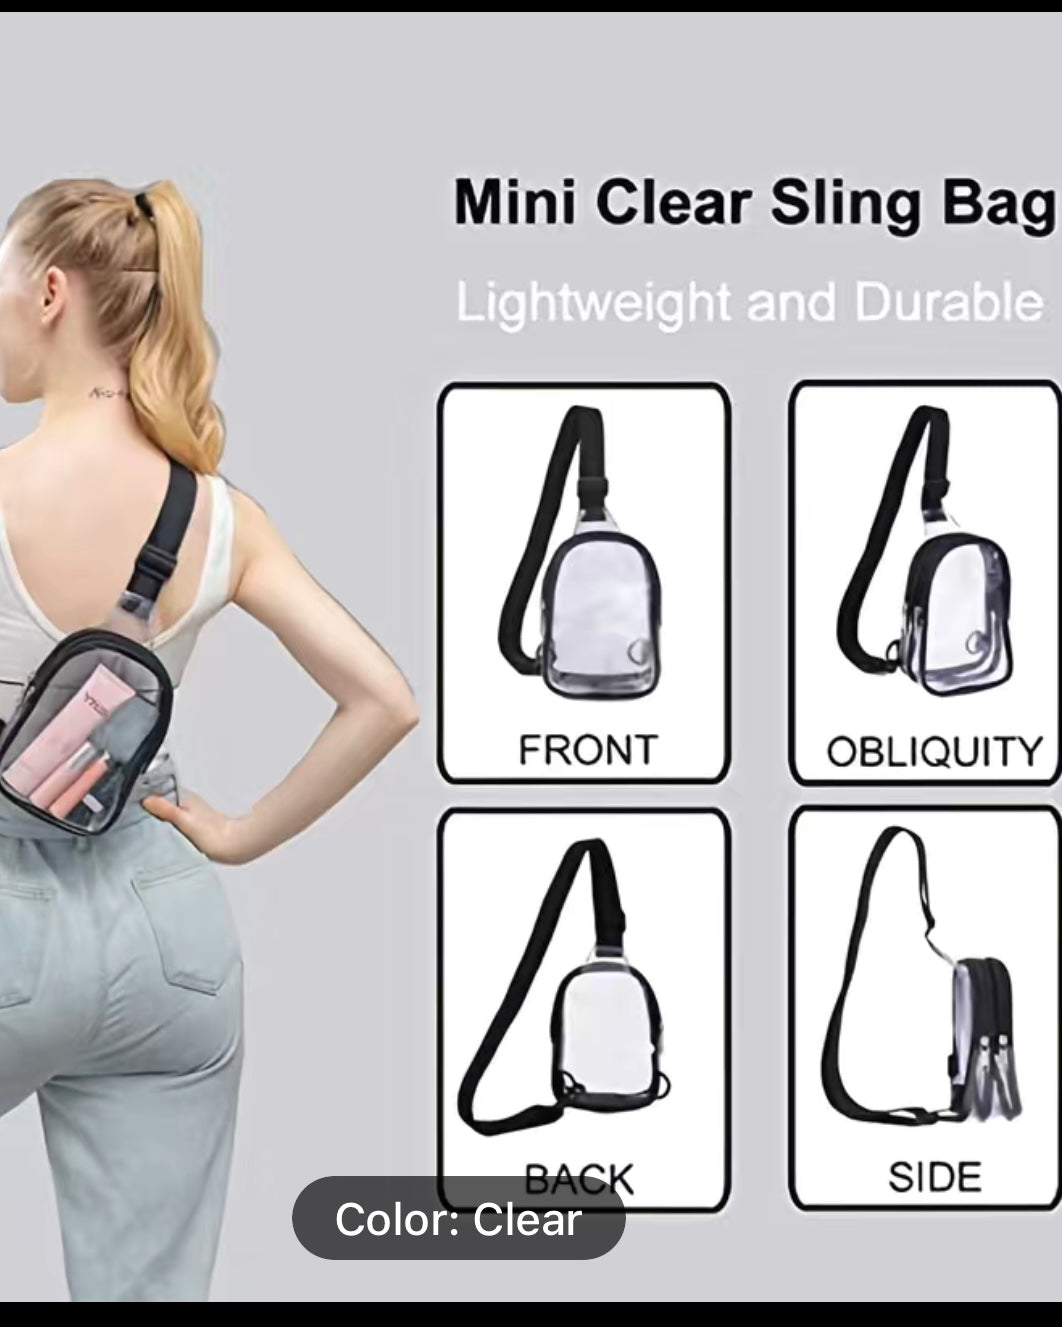 Mini Clear Sling